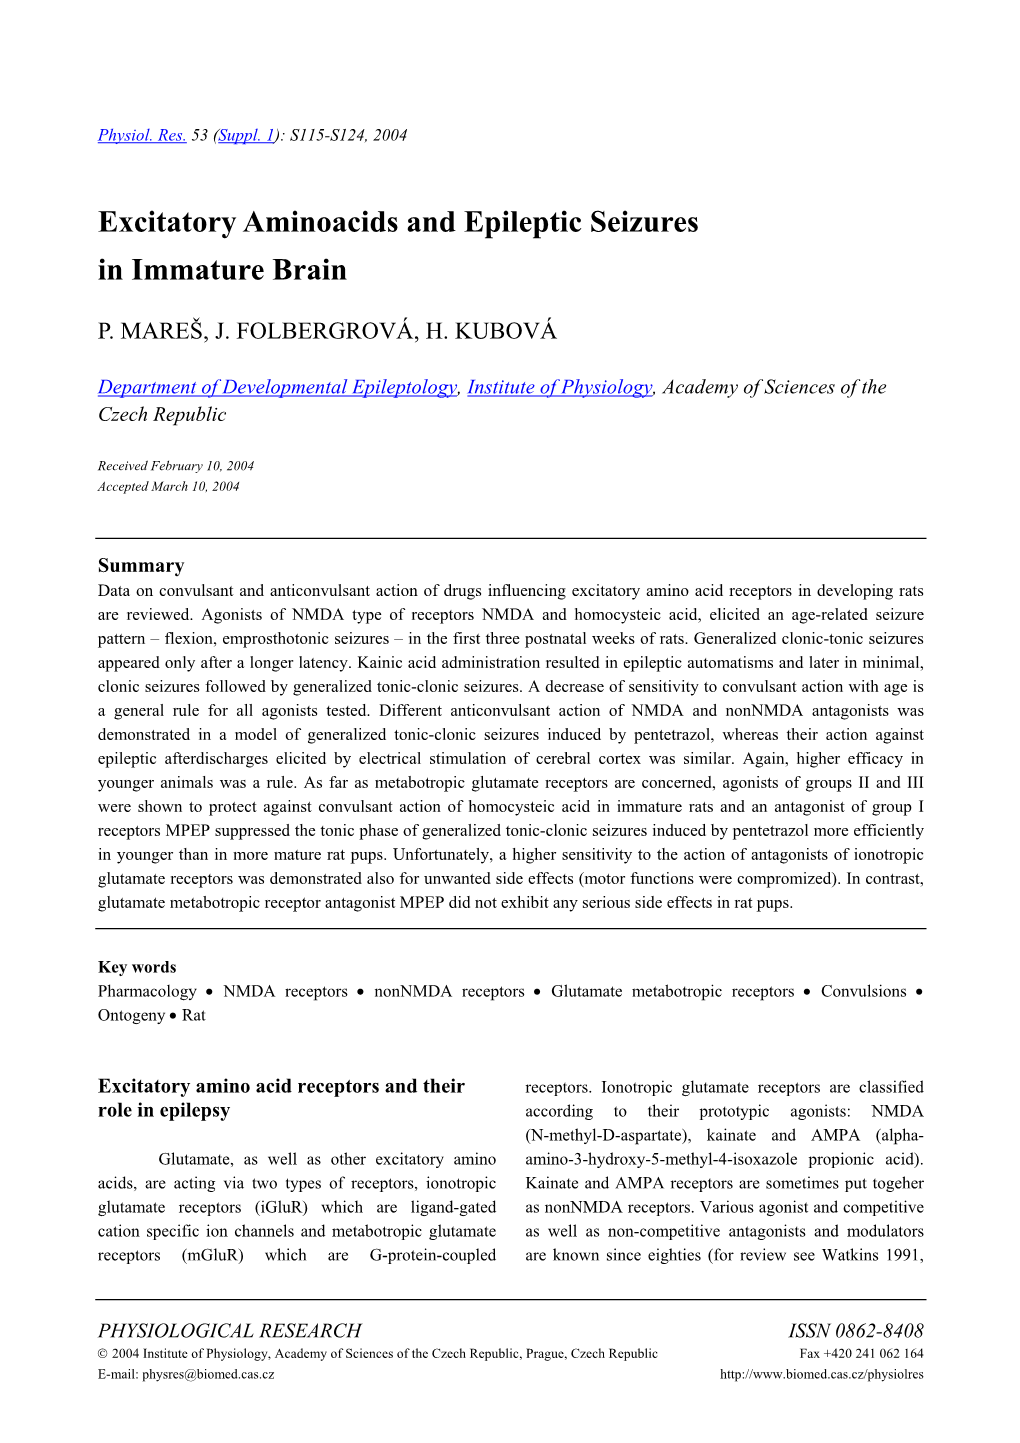 Excitatory Aminoacids and Epileptic Seizures in Immature Brain